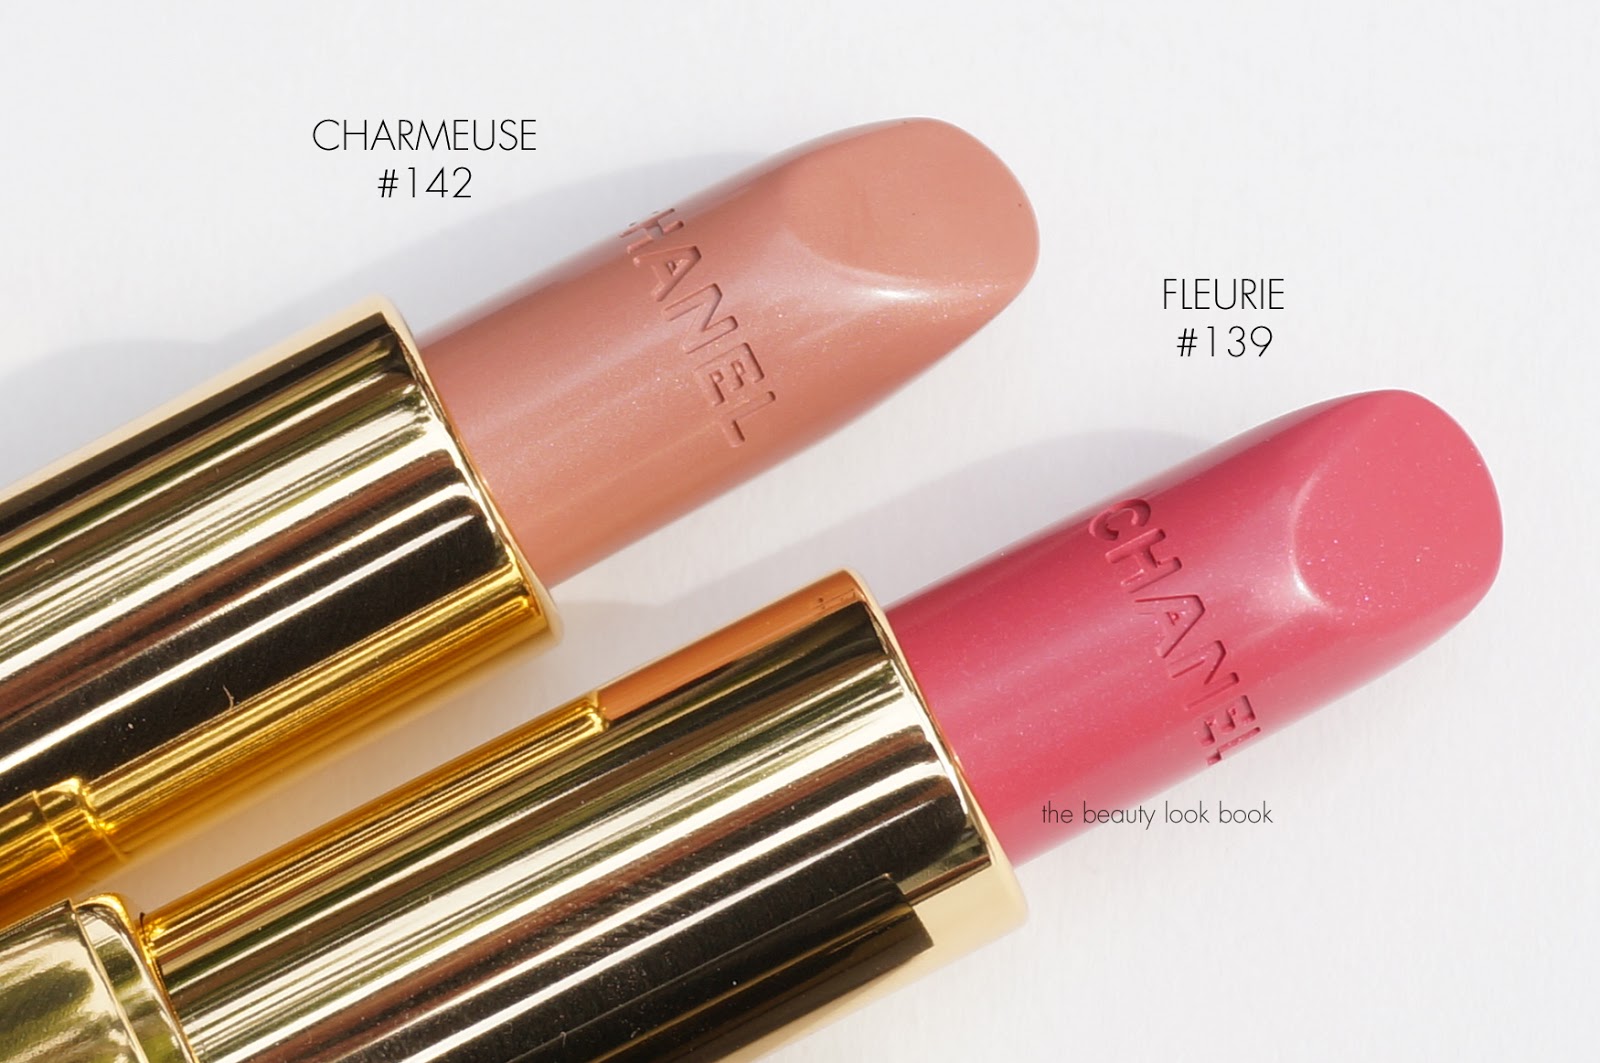 CHANEL'S ROUGE ALLURE- “velvet” Lipsticks … amazing colors